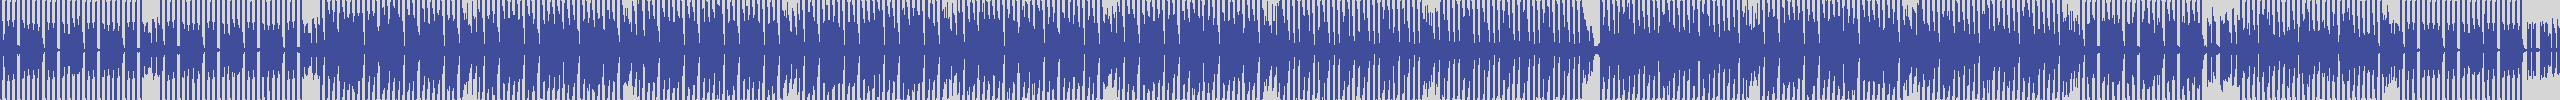 nf_boyz_records [NFY021] Tron Trax - Slide the Bass [Power Tech Mix] audio wave form